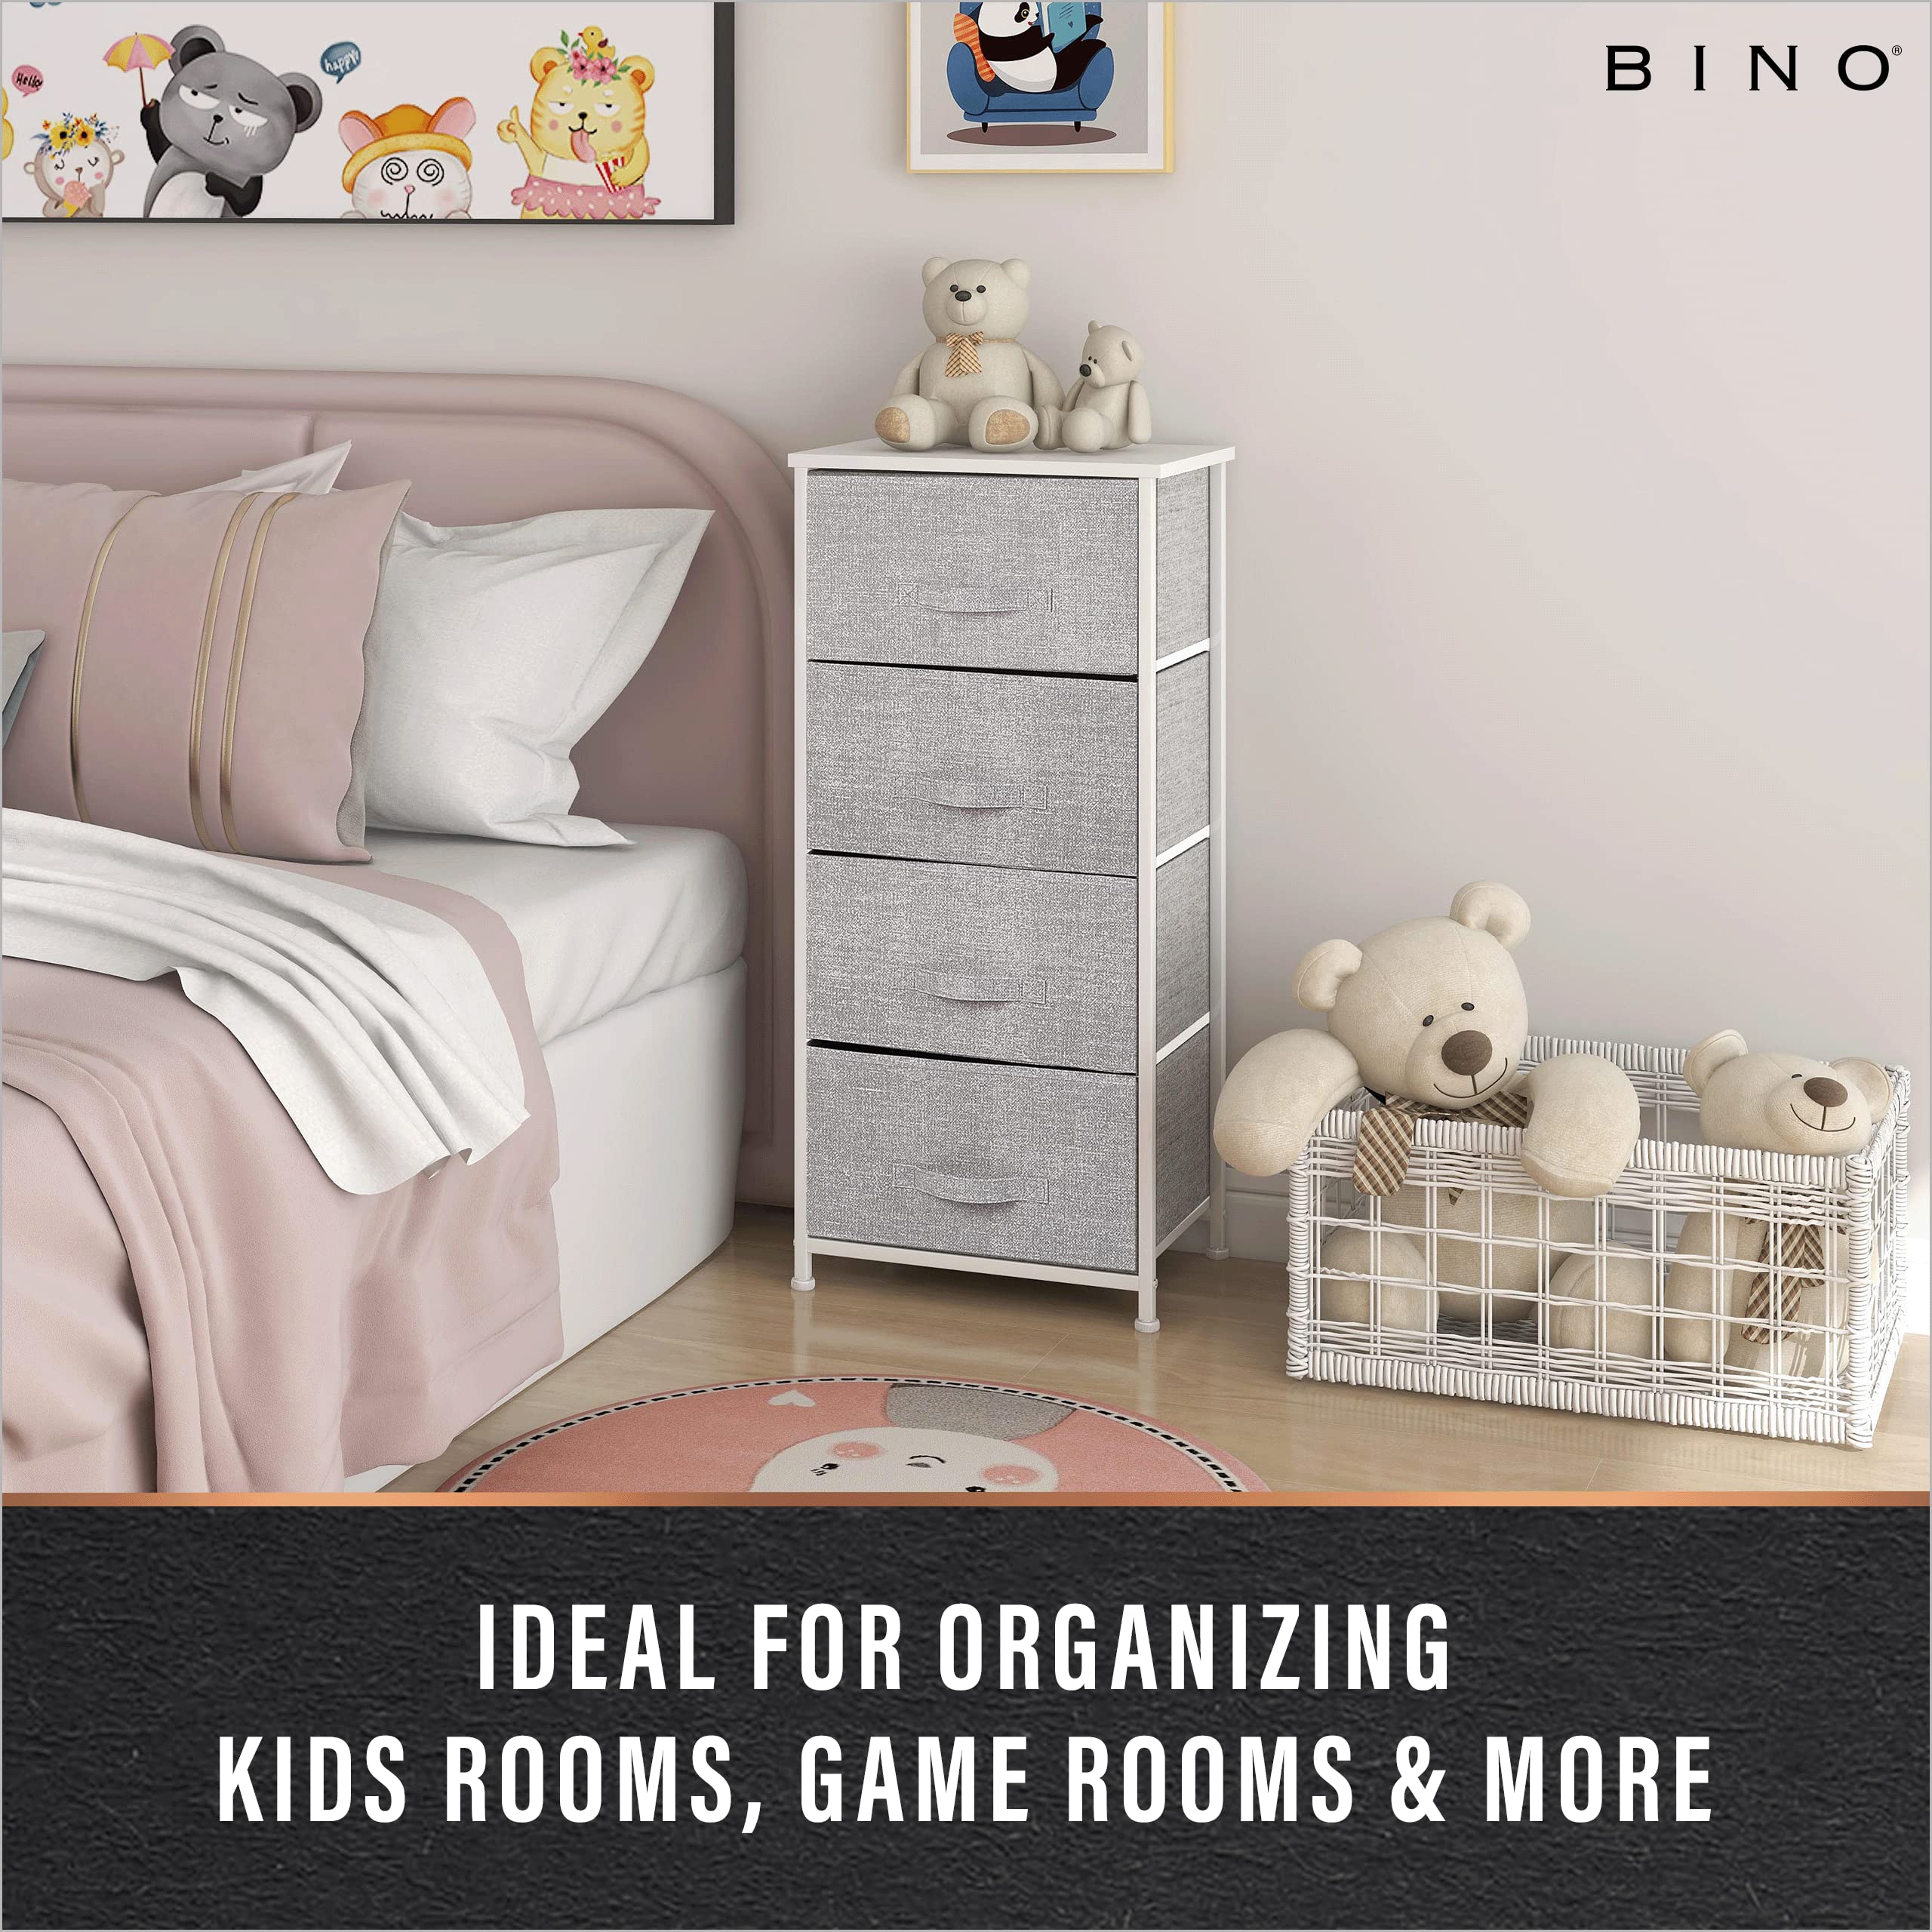 BINO 4-Drawer Fabric Dresser Storage Tower, Light Grey | Closet Organizer Unit | Bedroom Storage Cabinet | Clothing Drawer & Dresser Furniture | Organizing Drawer for Nursery Hallway Entryway Room